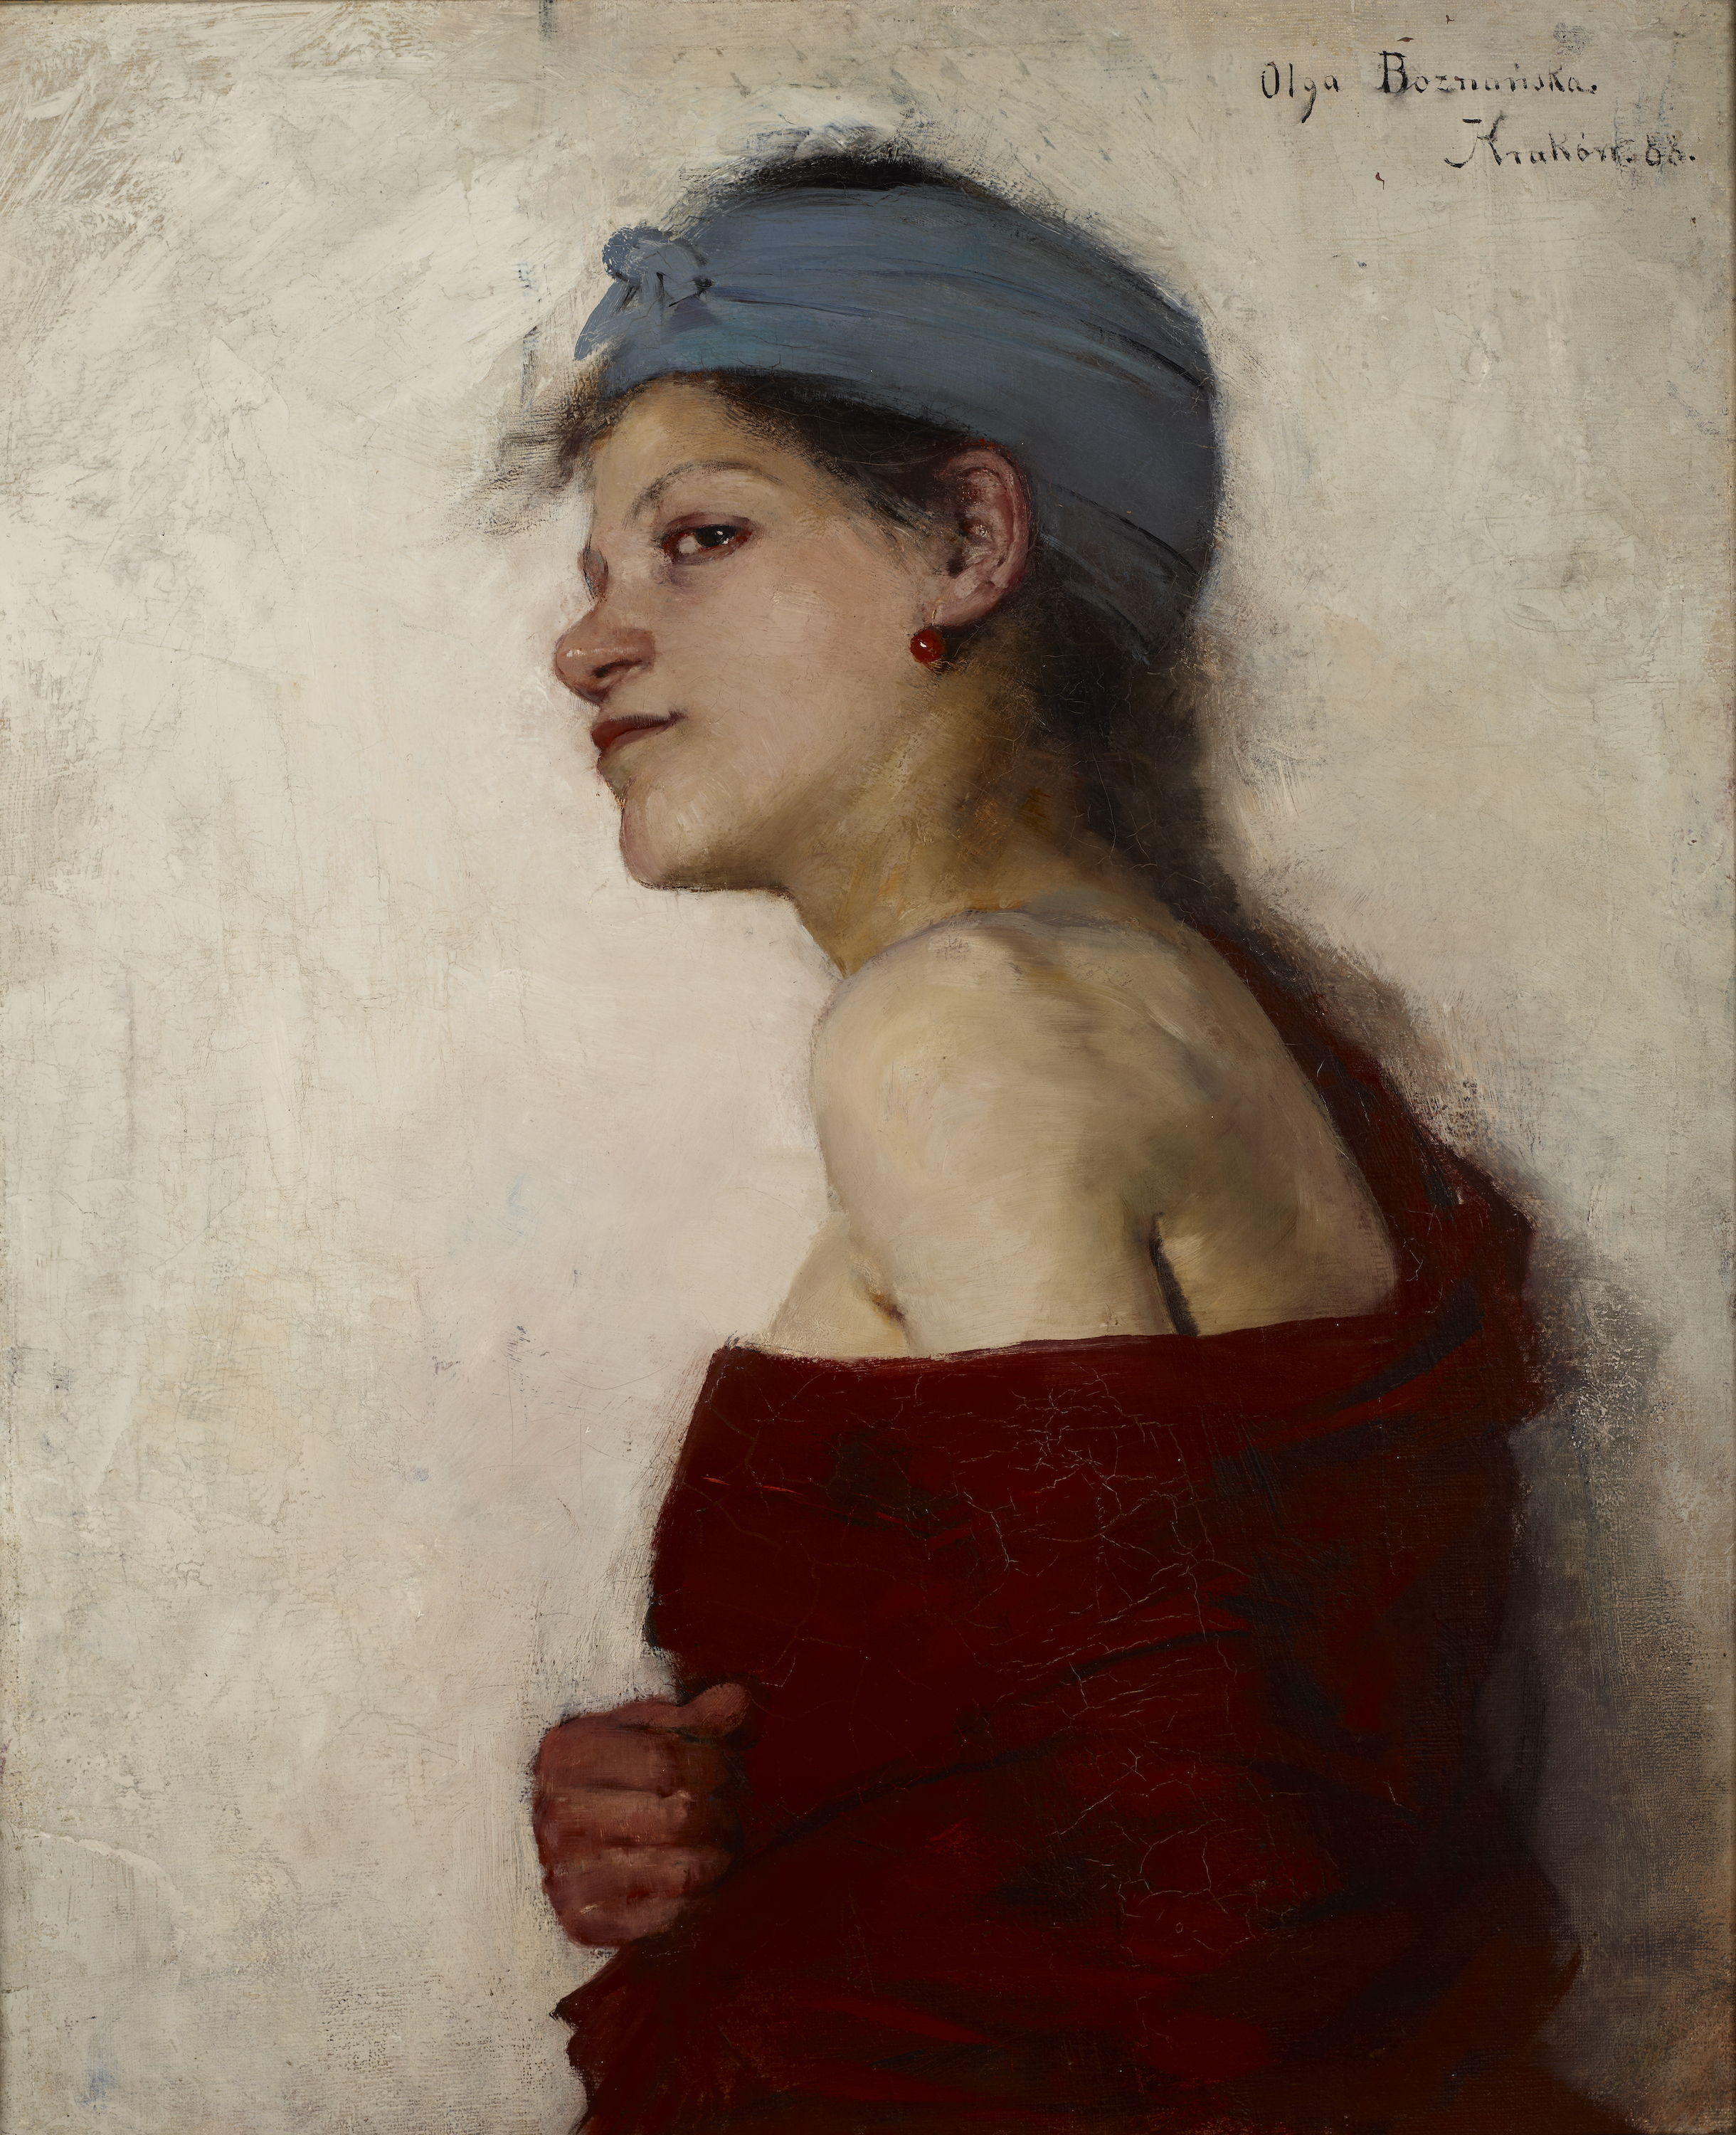 吉普賽女人 by Olga Boznańska - 1888年 